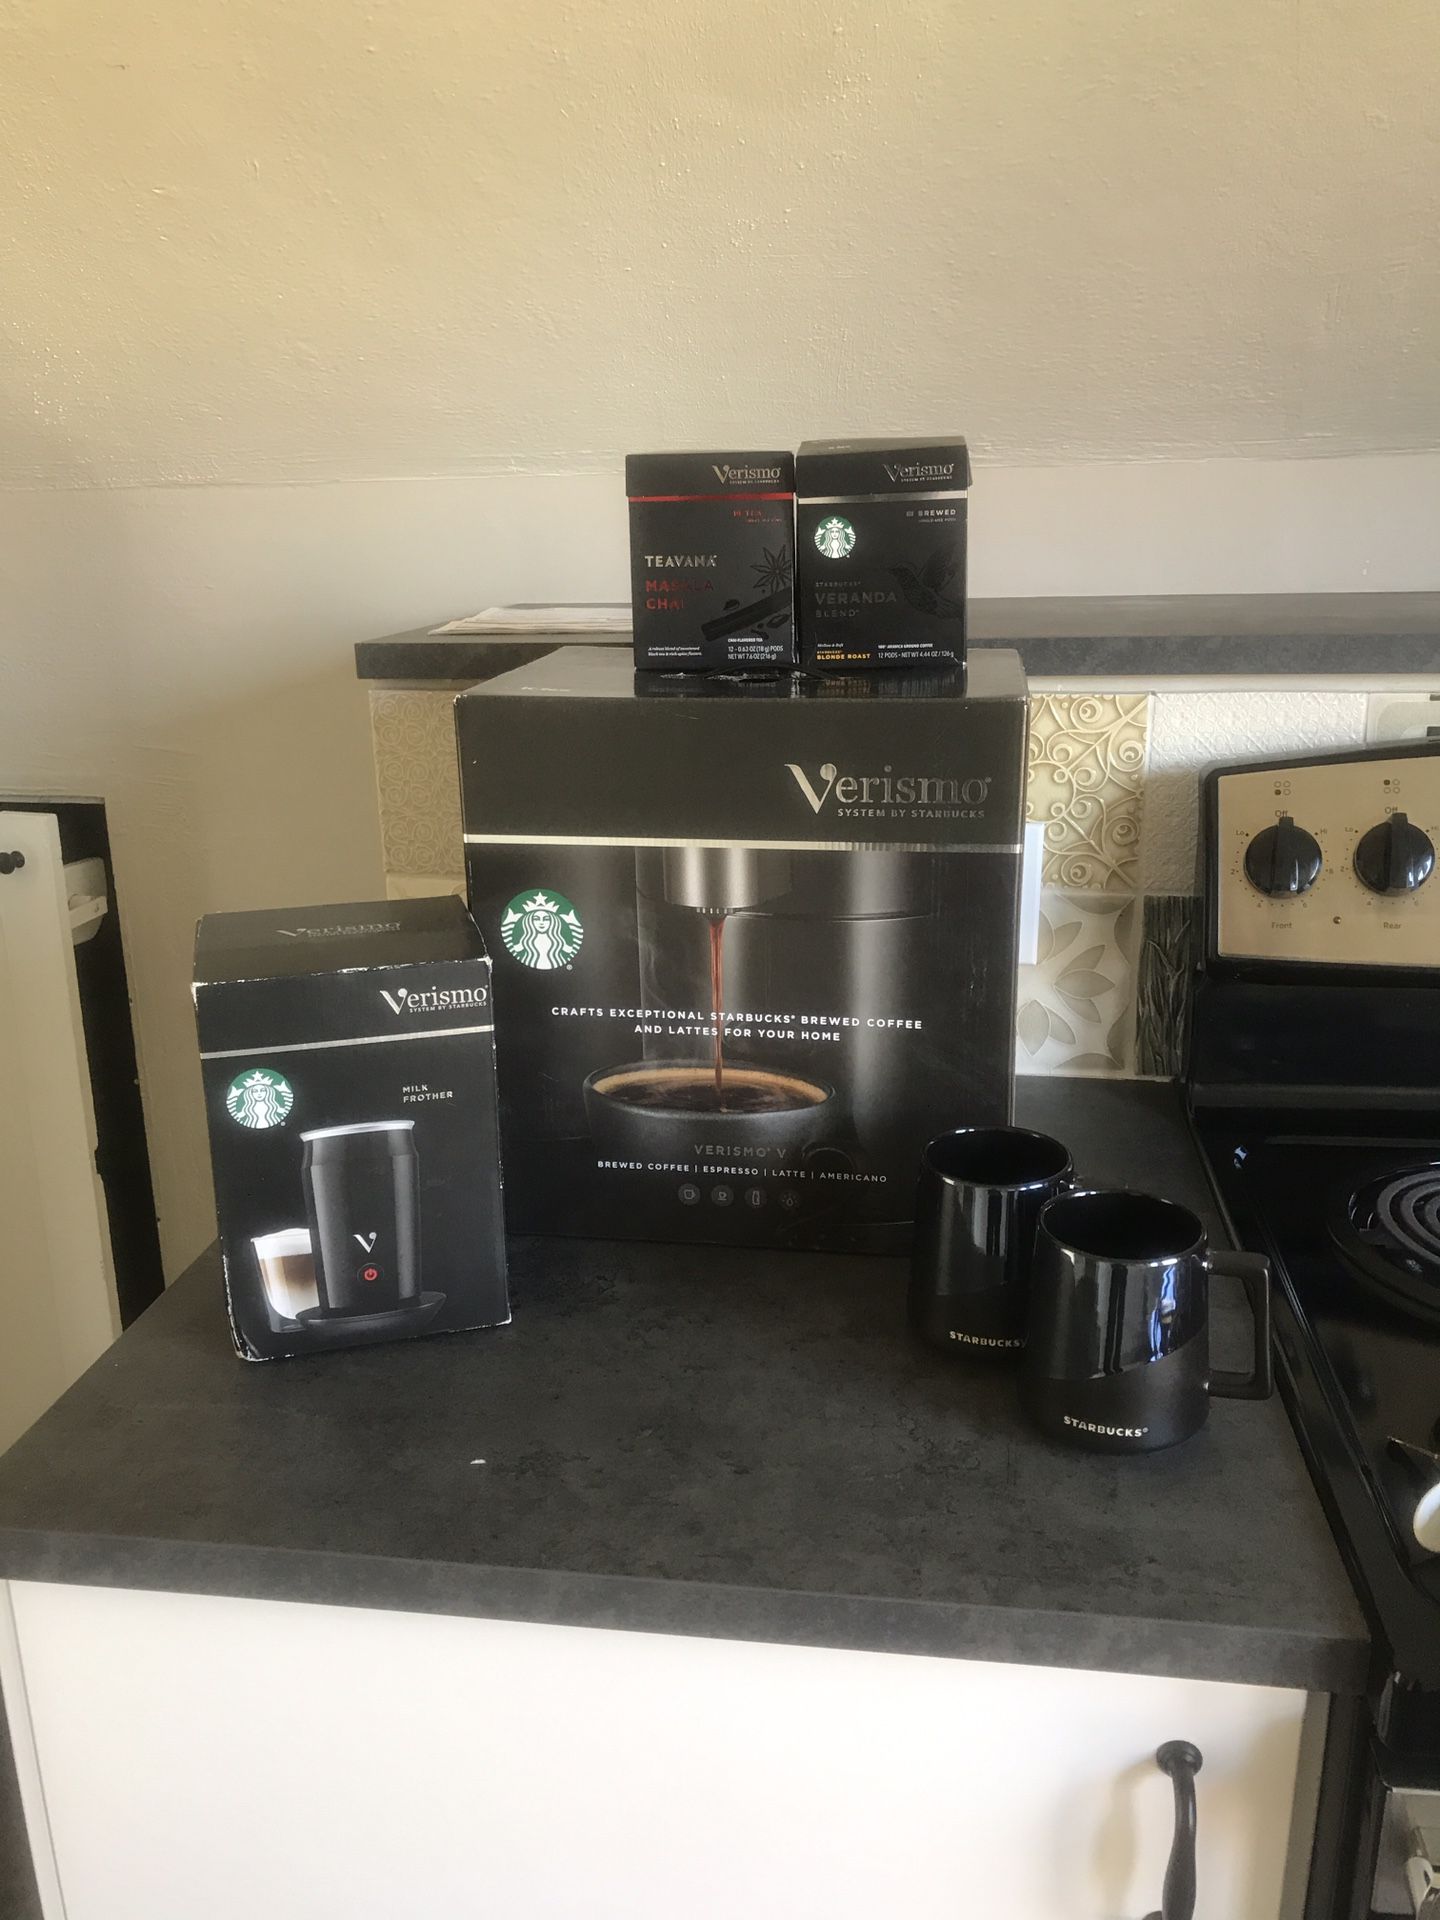 Starbucks Verismo V System Instant Coffee Maker